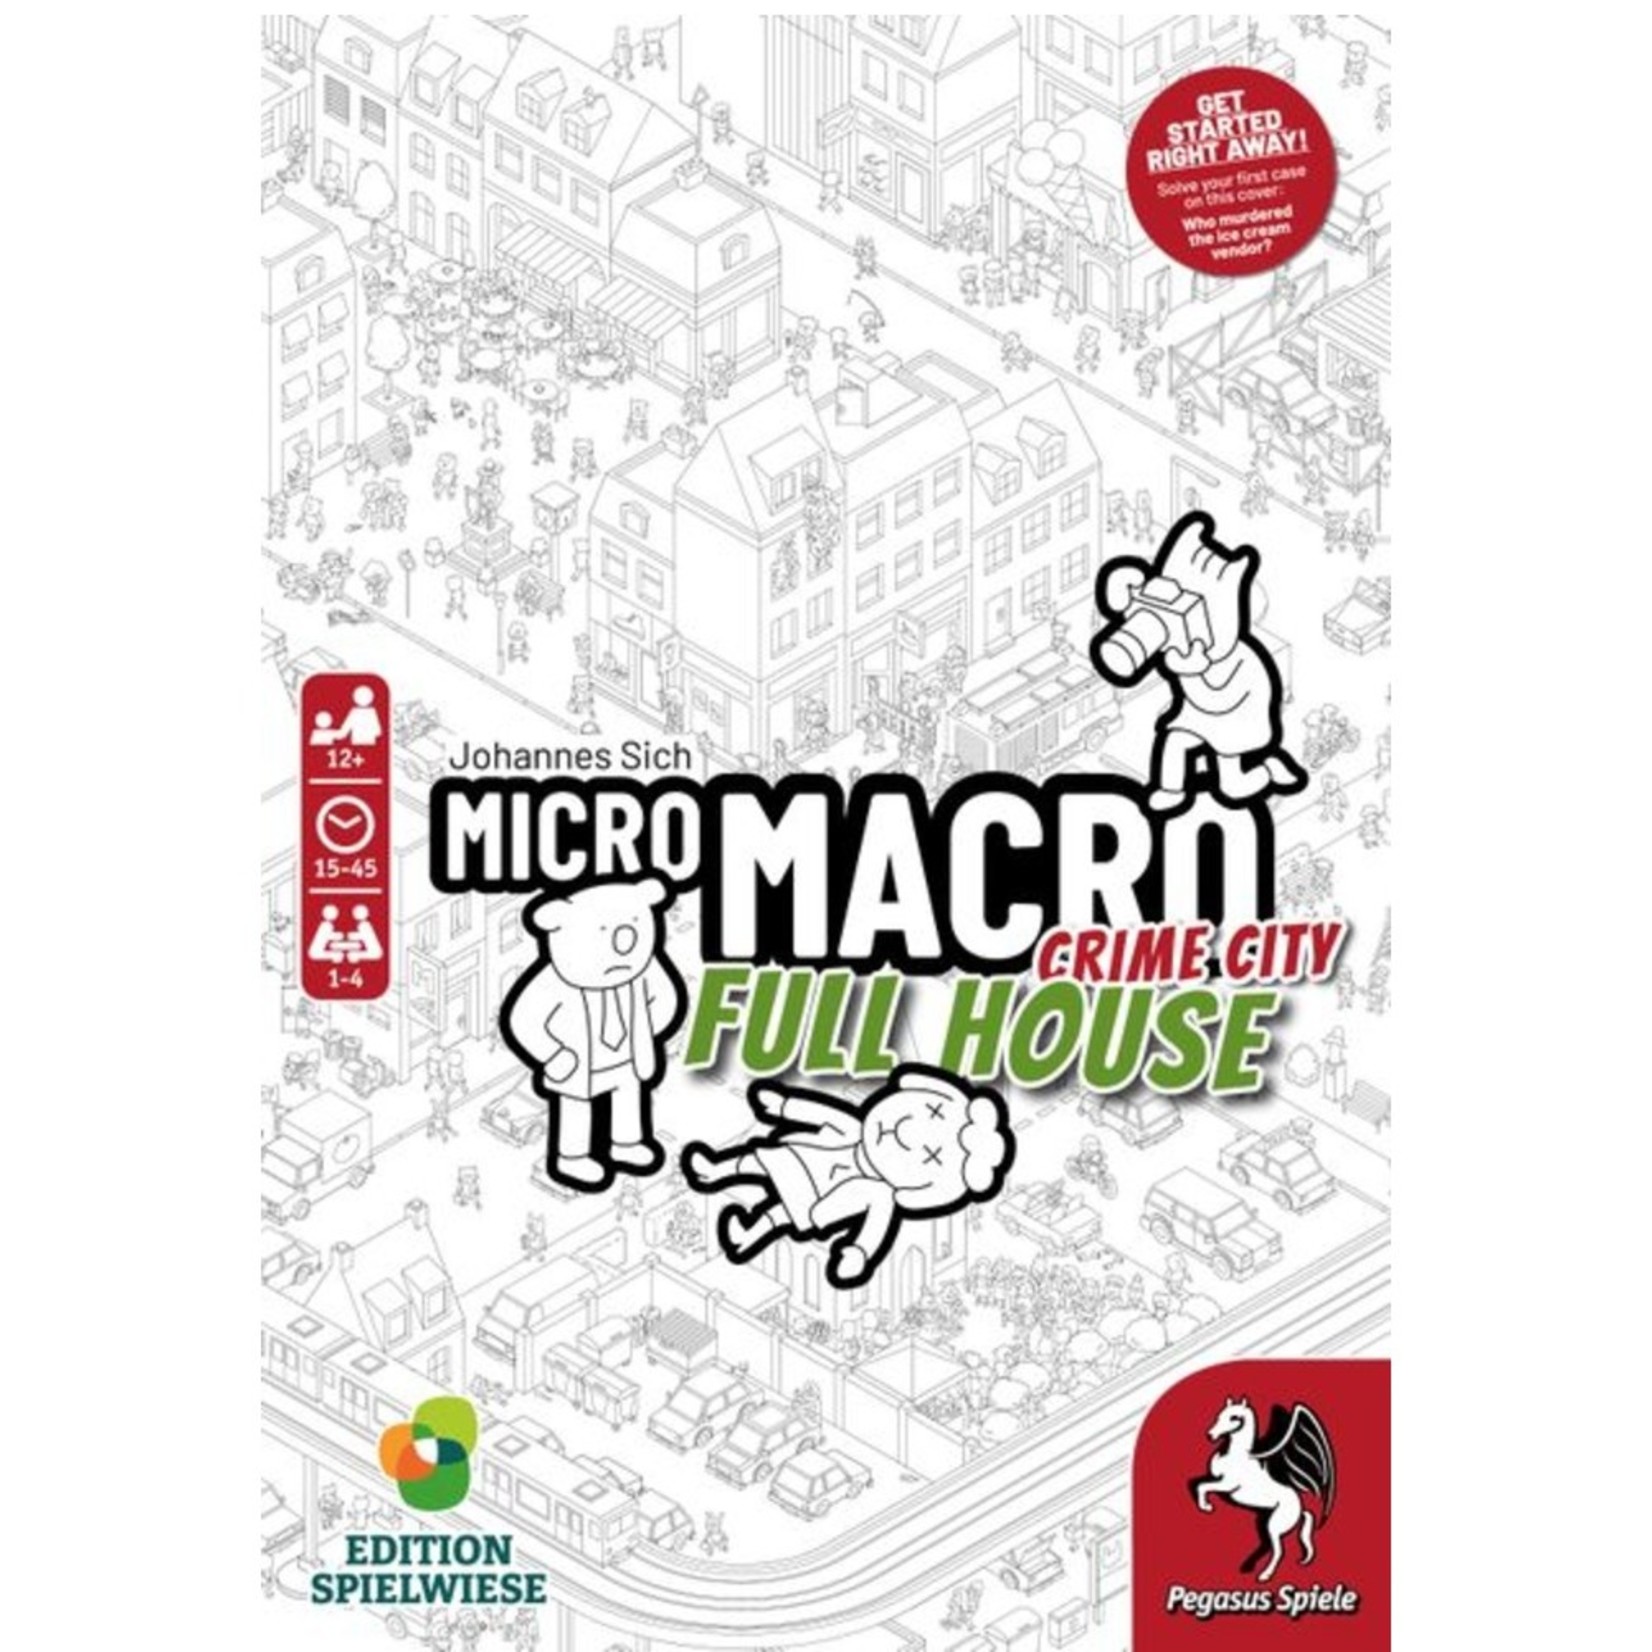 Pegasus Spiele North America MicroMacro Crime City 2 Full House